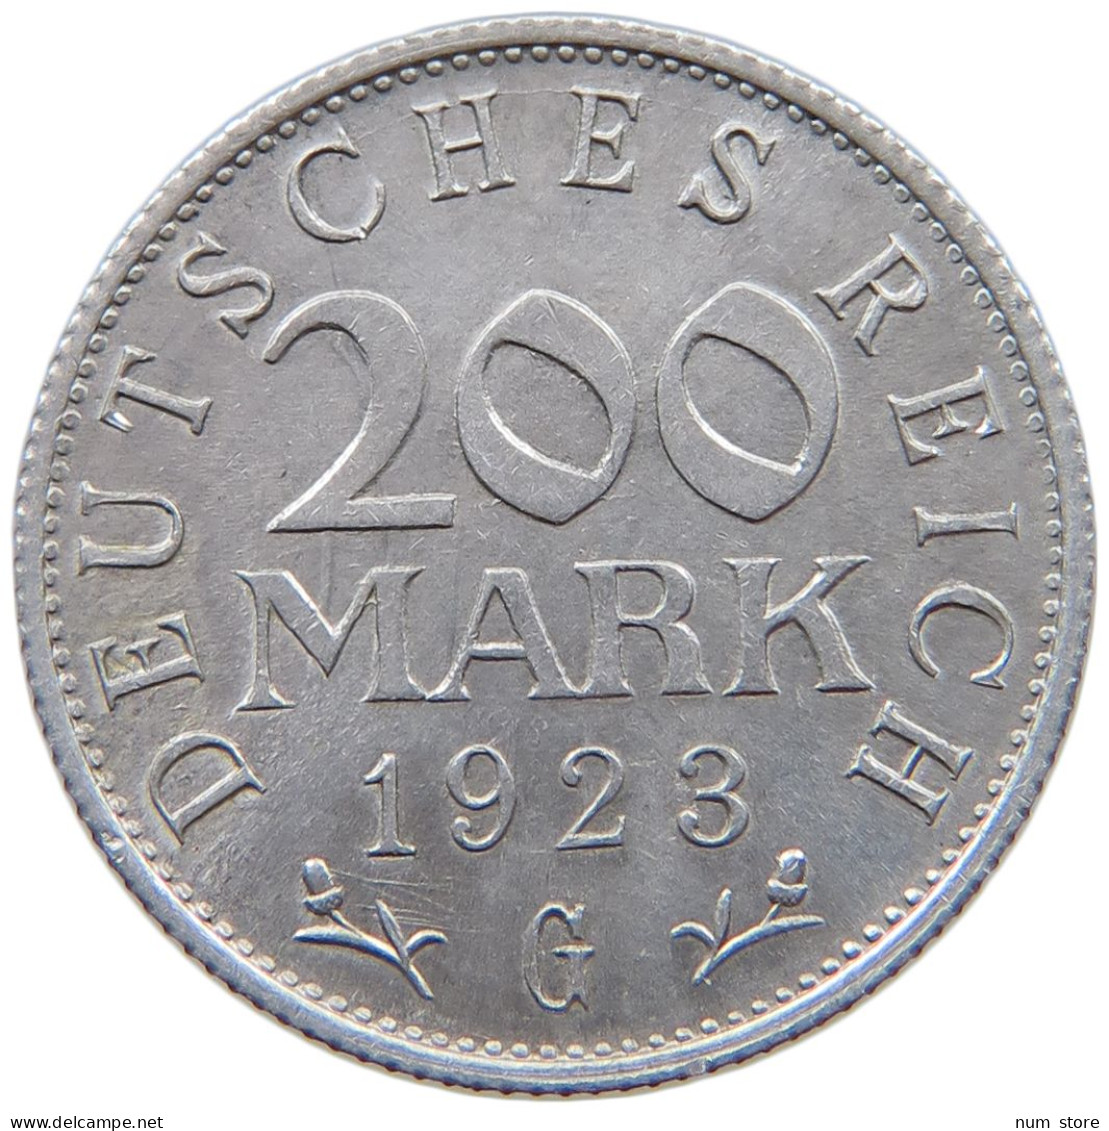 WEIMARER REPUBLIK 200 MARK 1923 G  #a088 0475 - 200 & 500 Mark